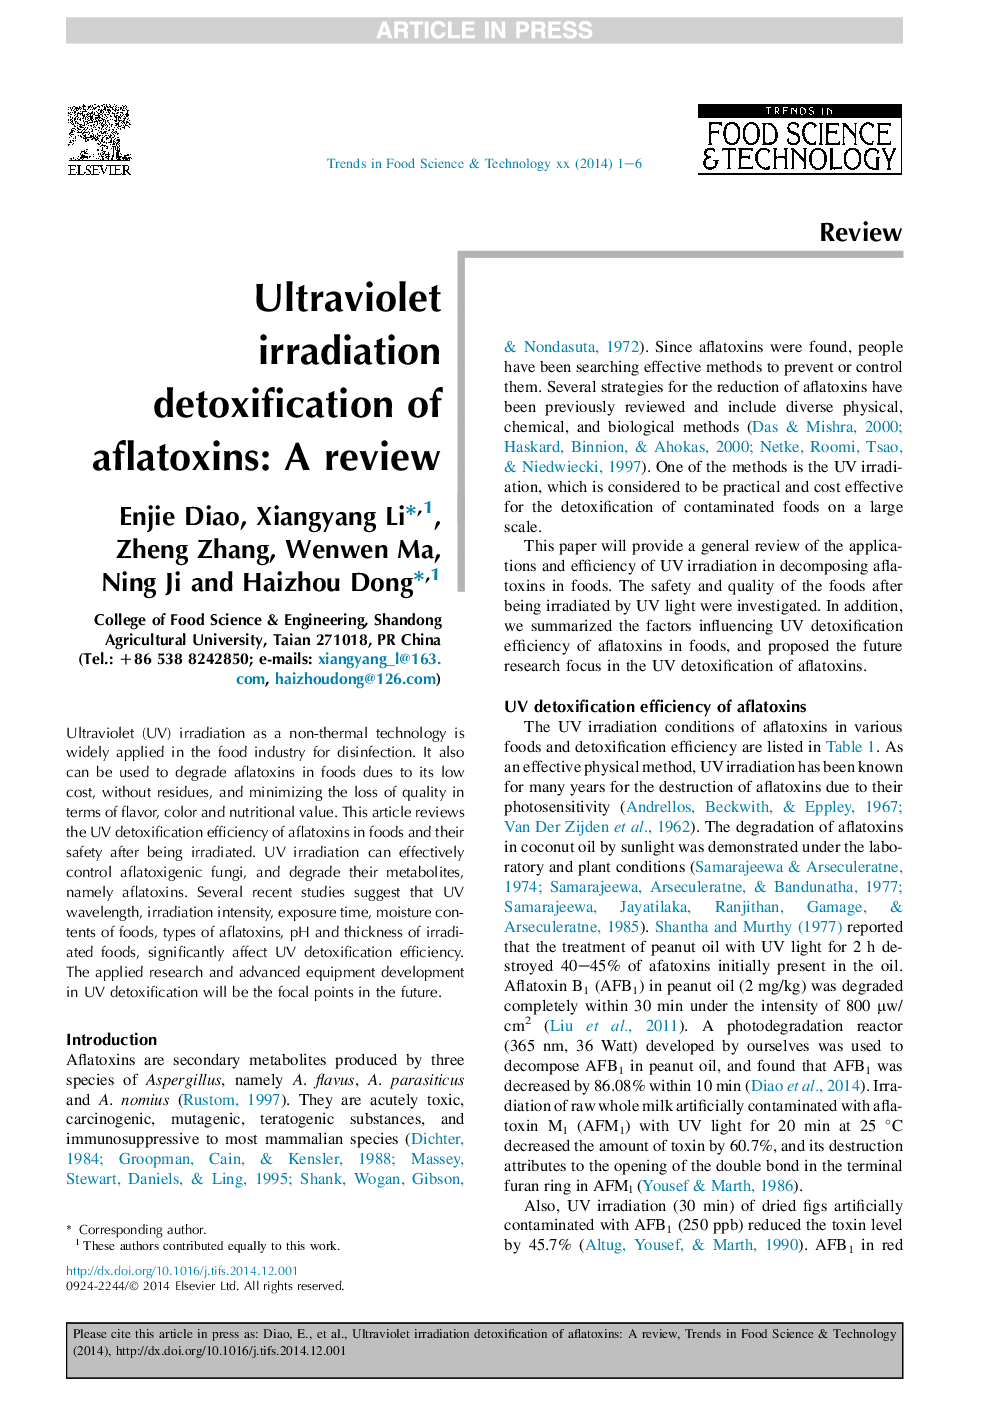 Ultraviolet irradiation detoxification of aflatoxins